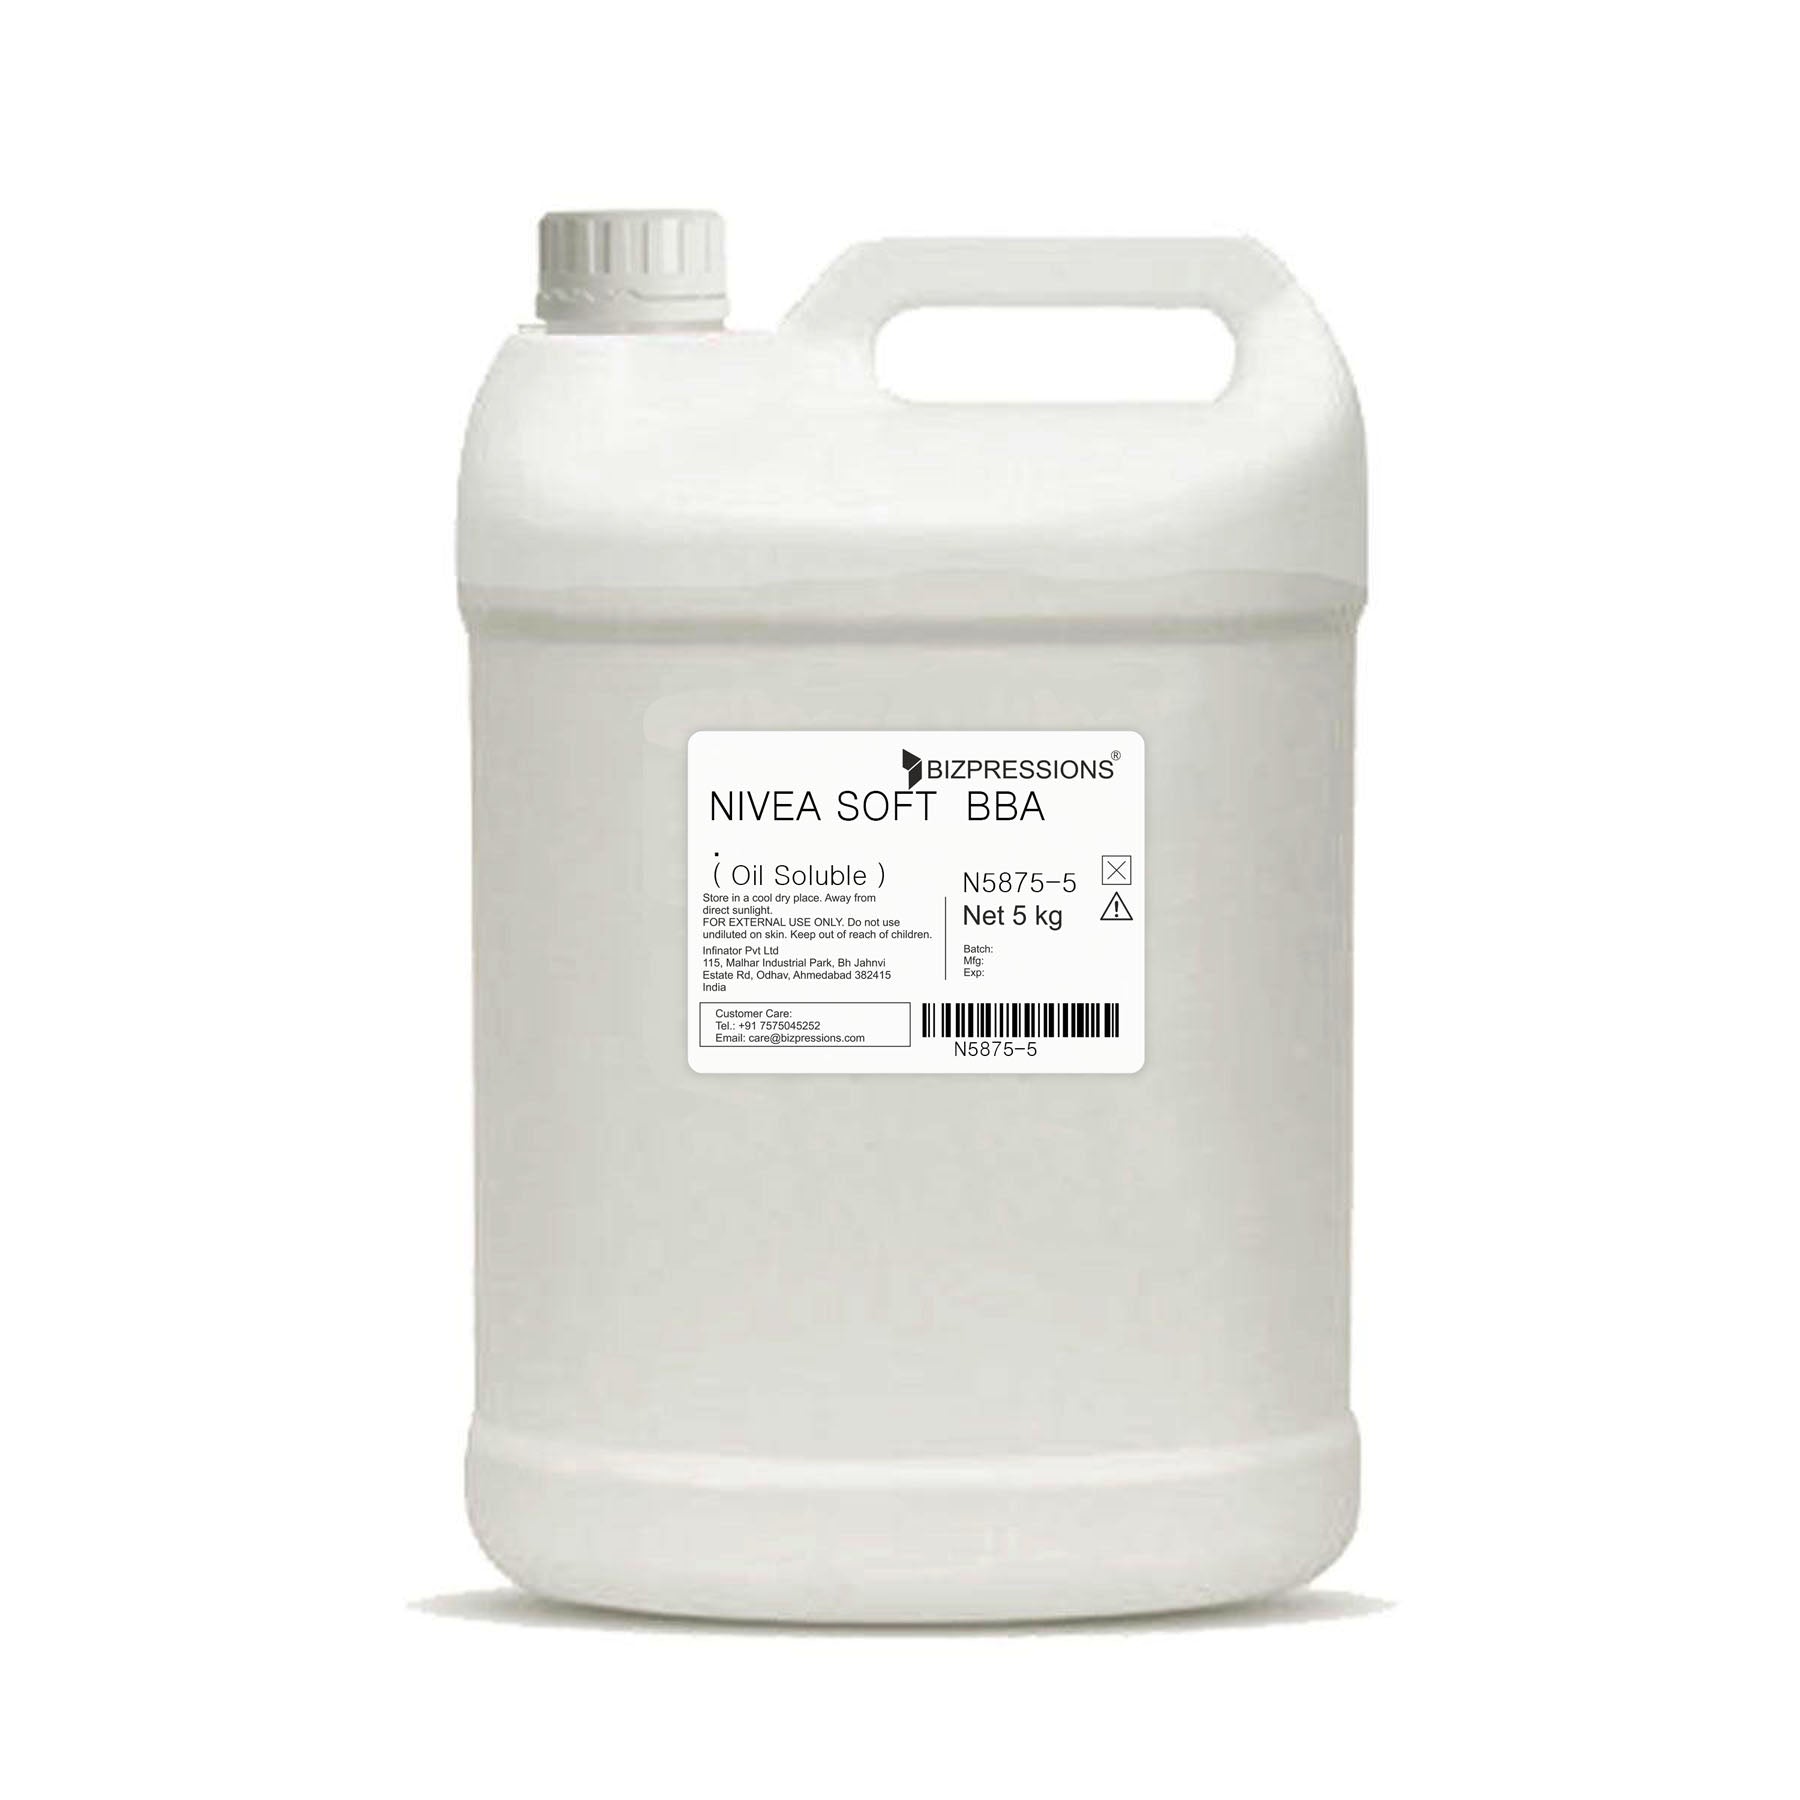 NIVEA SOFT B.B.A. - Fragrance ( Oil Soluble ) - 5 kg